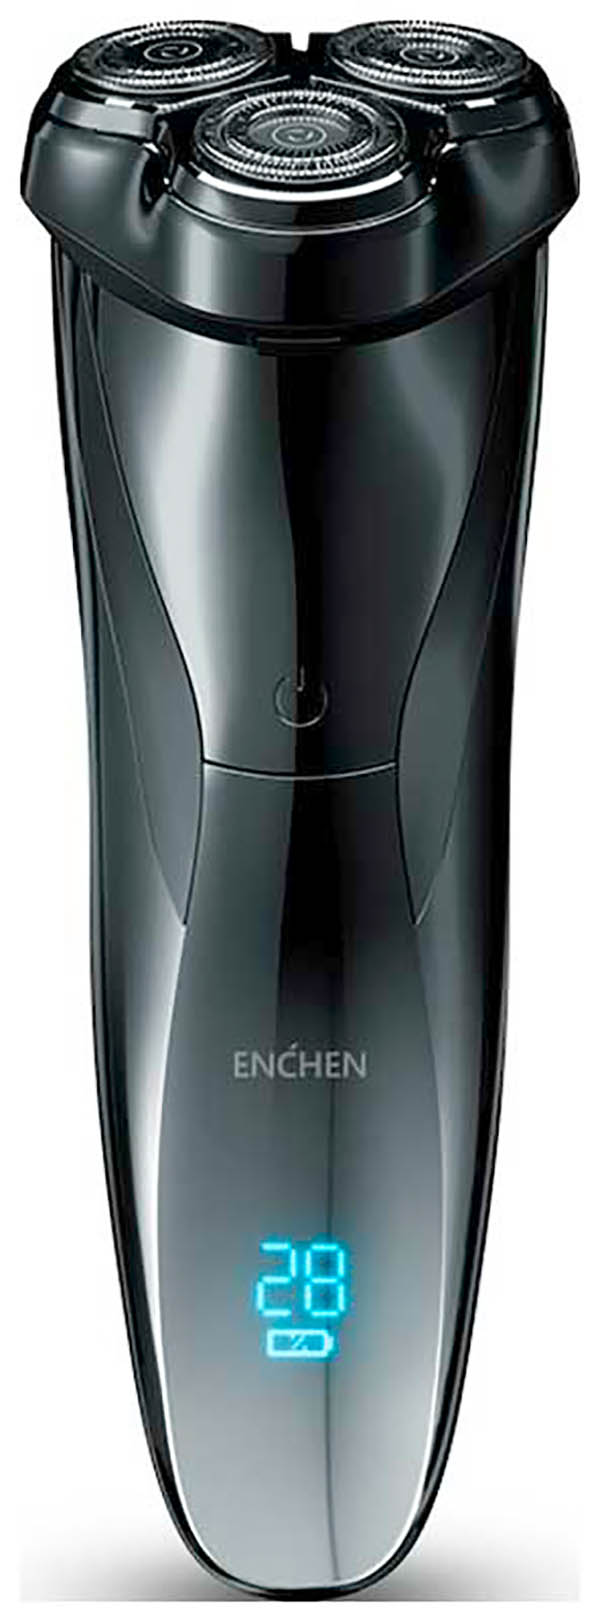 Электробритва Enchen BlackStone 3 Electric Shaver электробритва showsee electric shaver f305 серая f305 gy